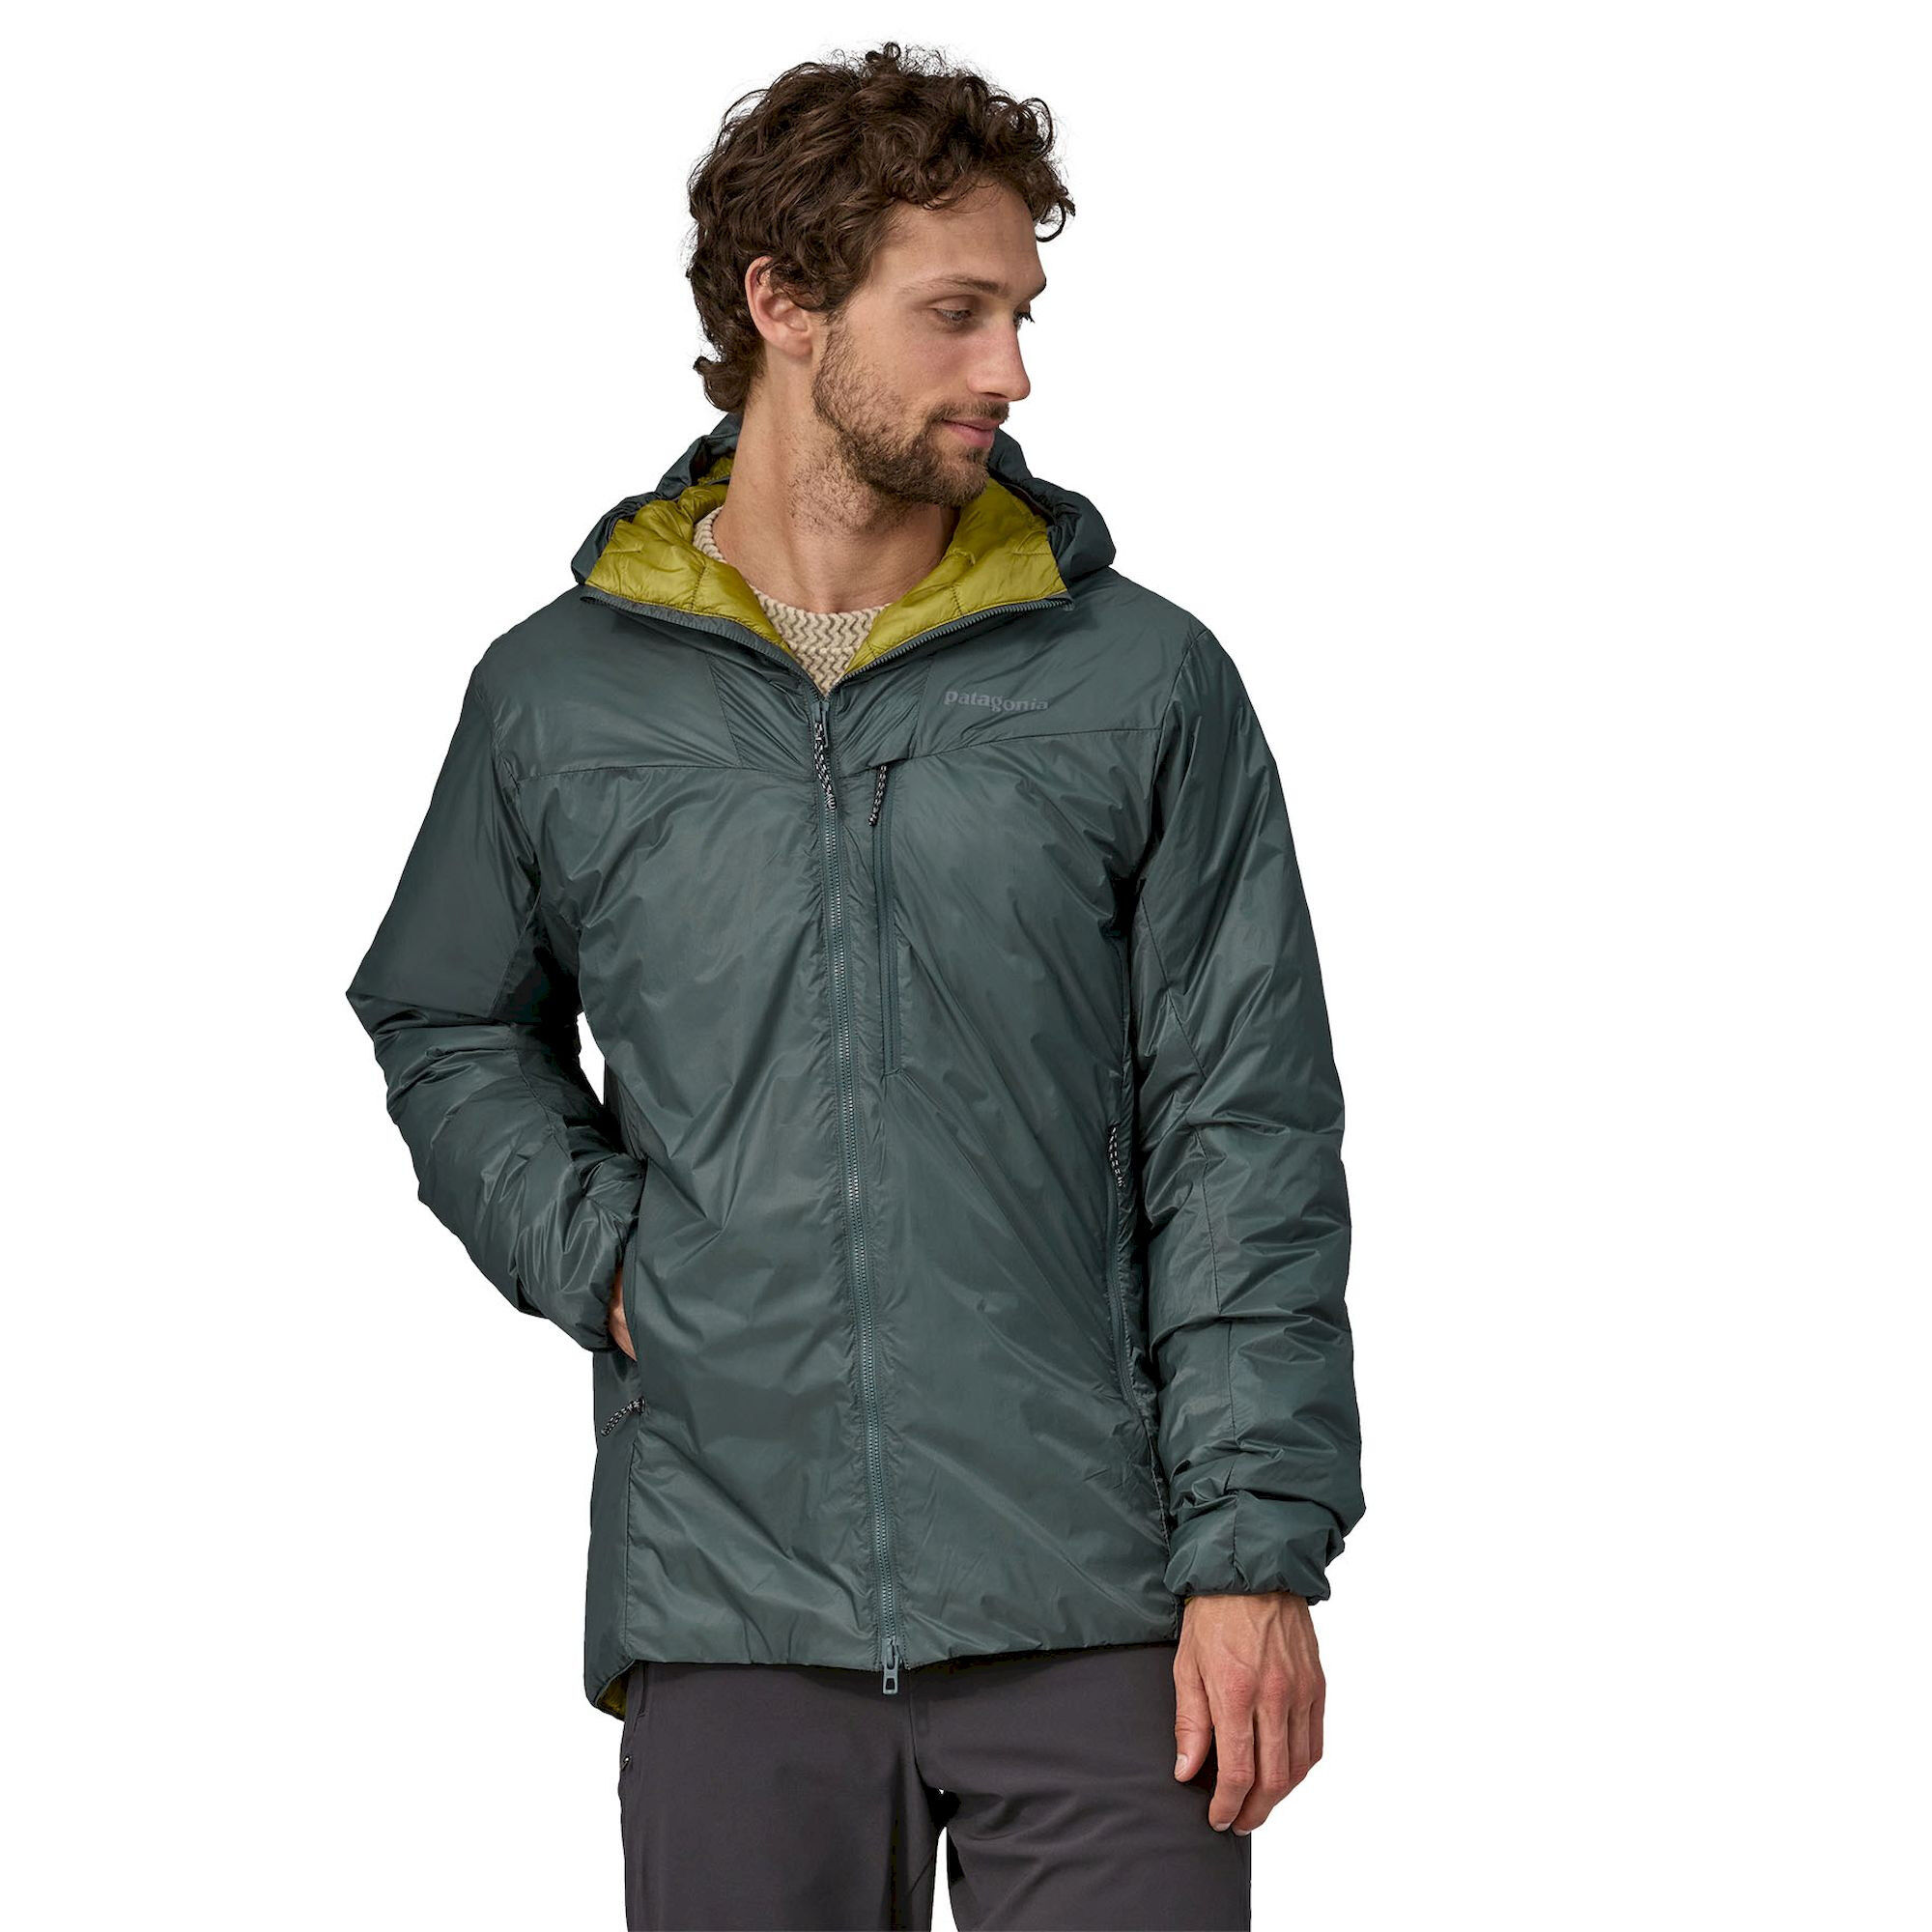 Patagonia DAS Light Hoody - Synthetic jacket - Men's